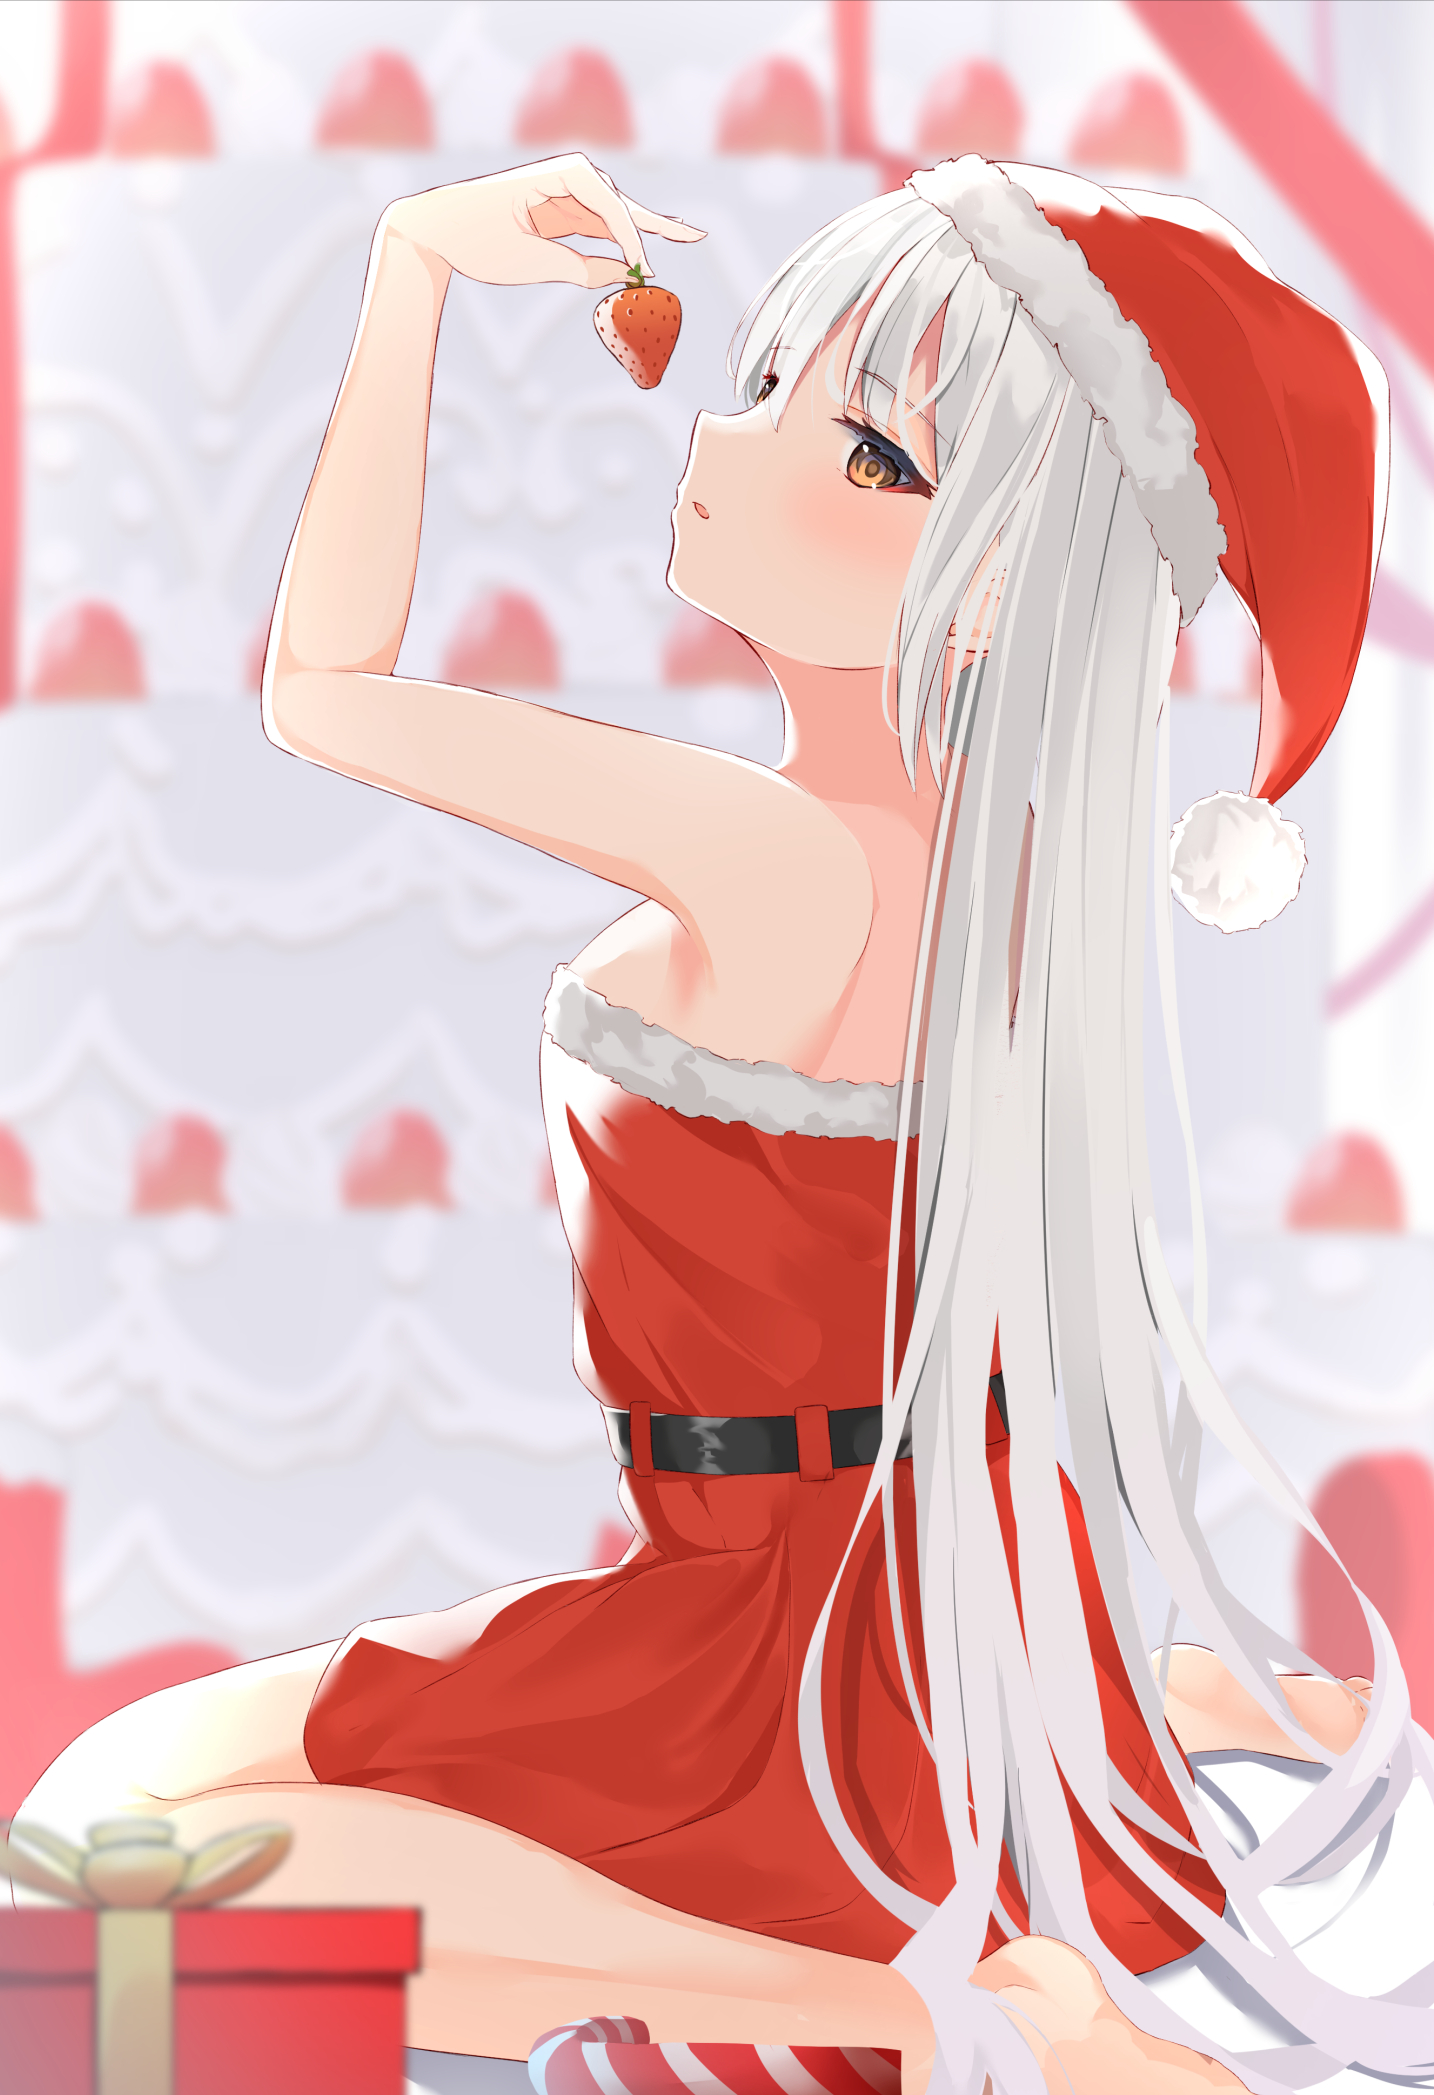 Anime 1434x2095 anime anime girls digital art artwork 2D portrait display Hikashou Christmas Santa girl bare shoulders barefoot kneeling Santa hats white hair brown eyes